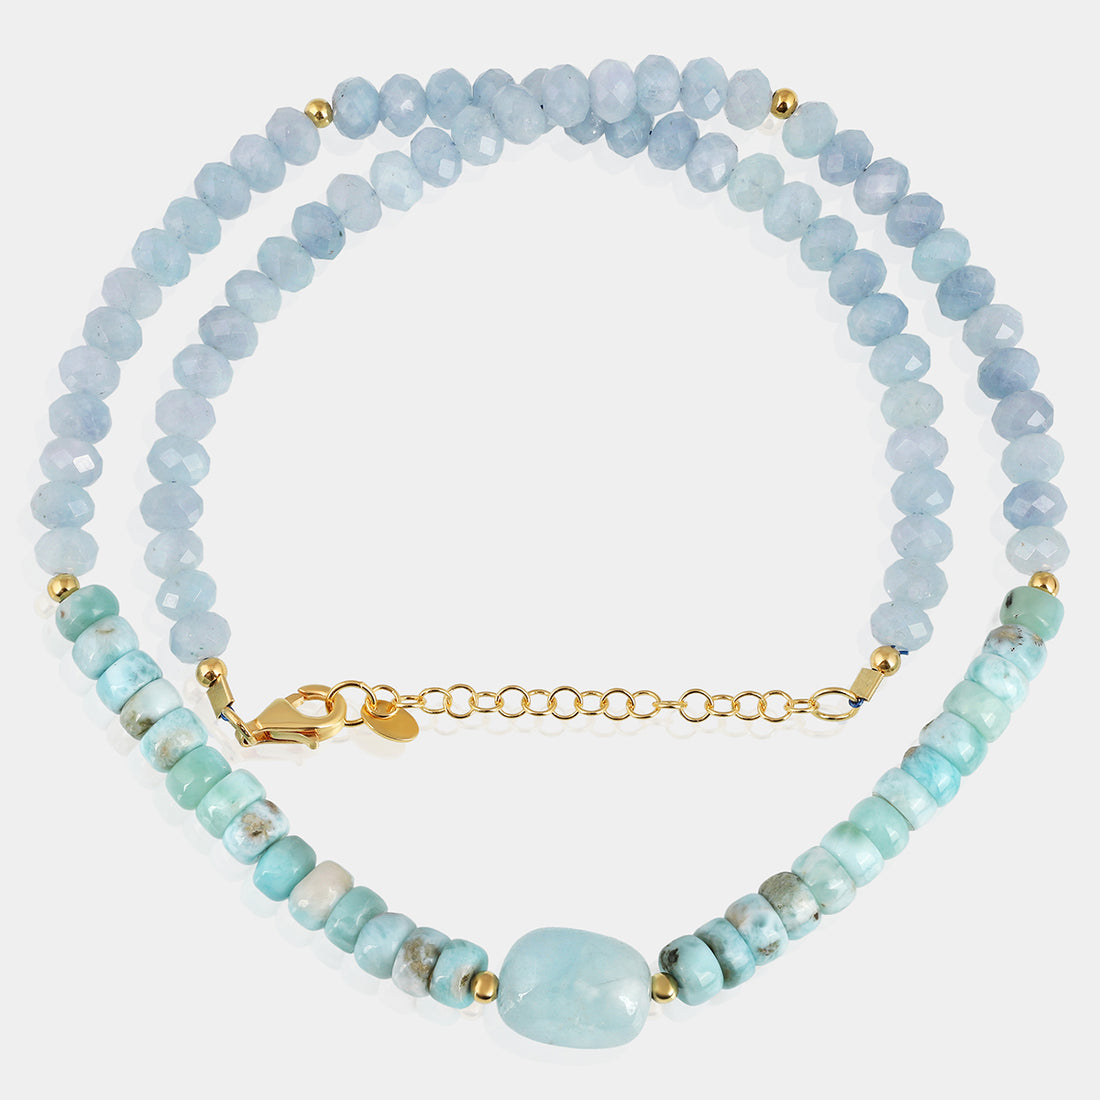 Aquamarine and Larimar Beads Silver Necklace